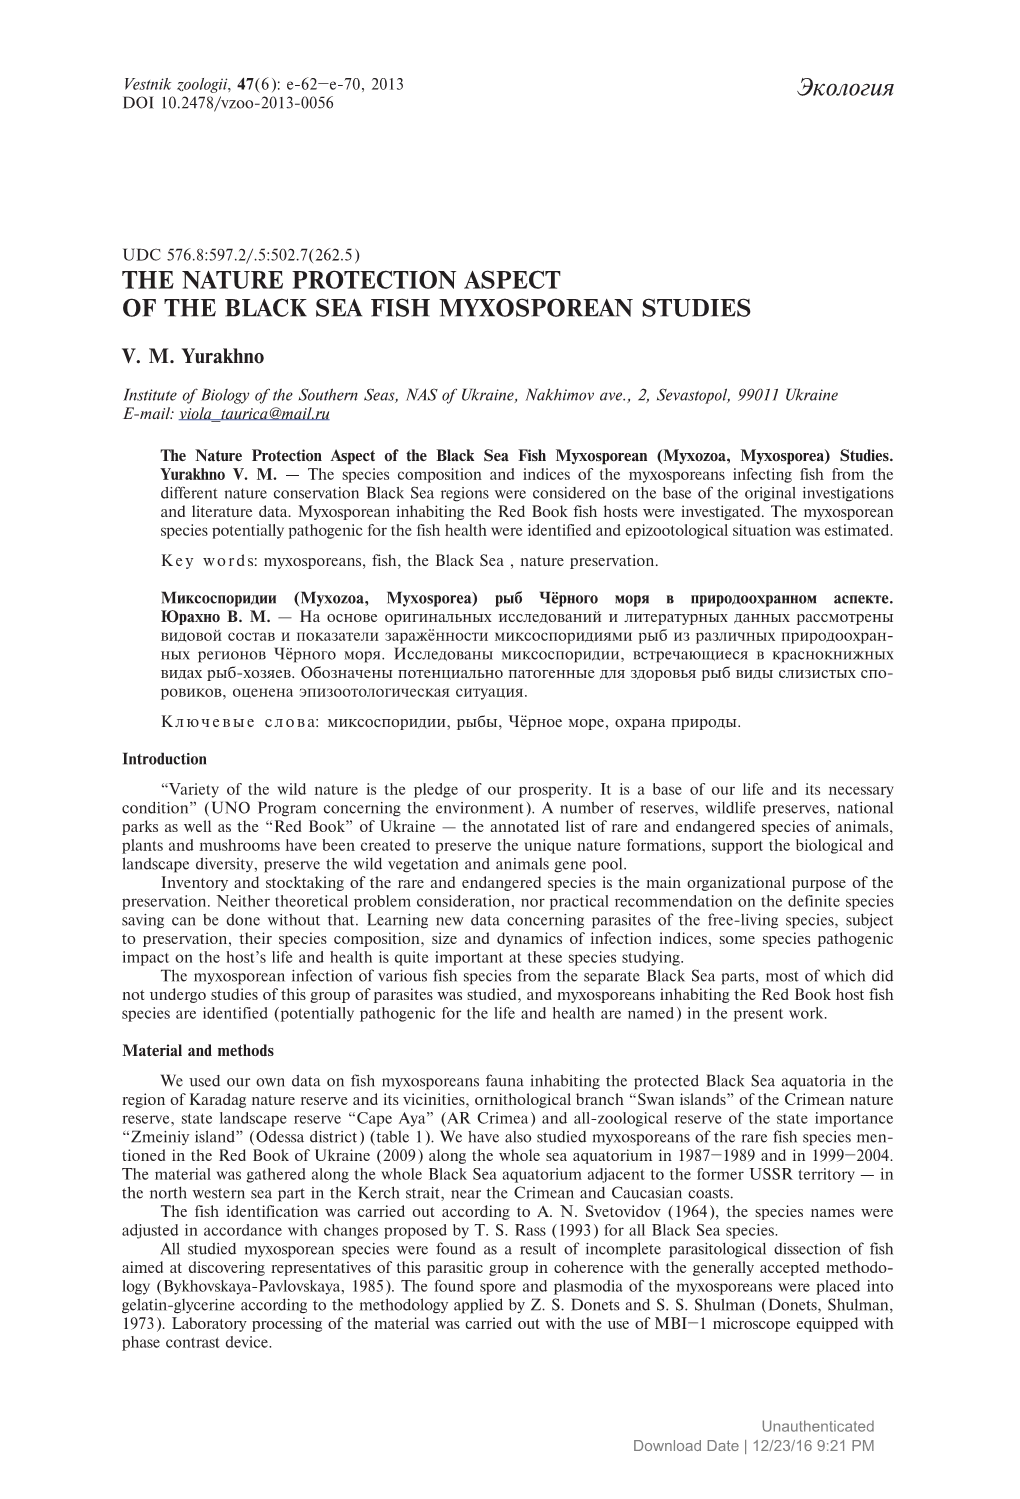 The Nature Protection Aspect of the Black Sea Fish Myxosporean Studies